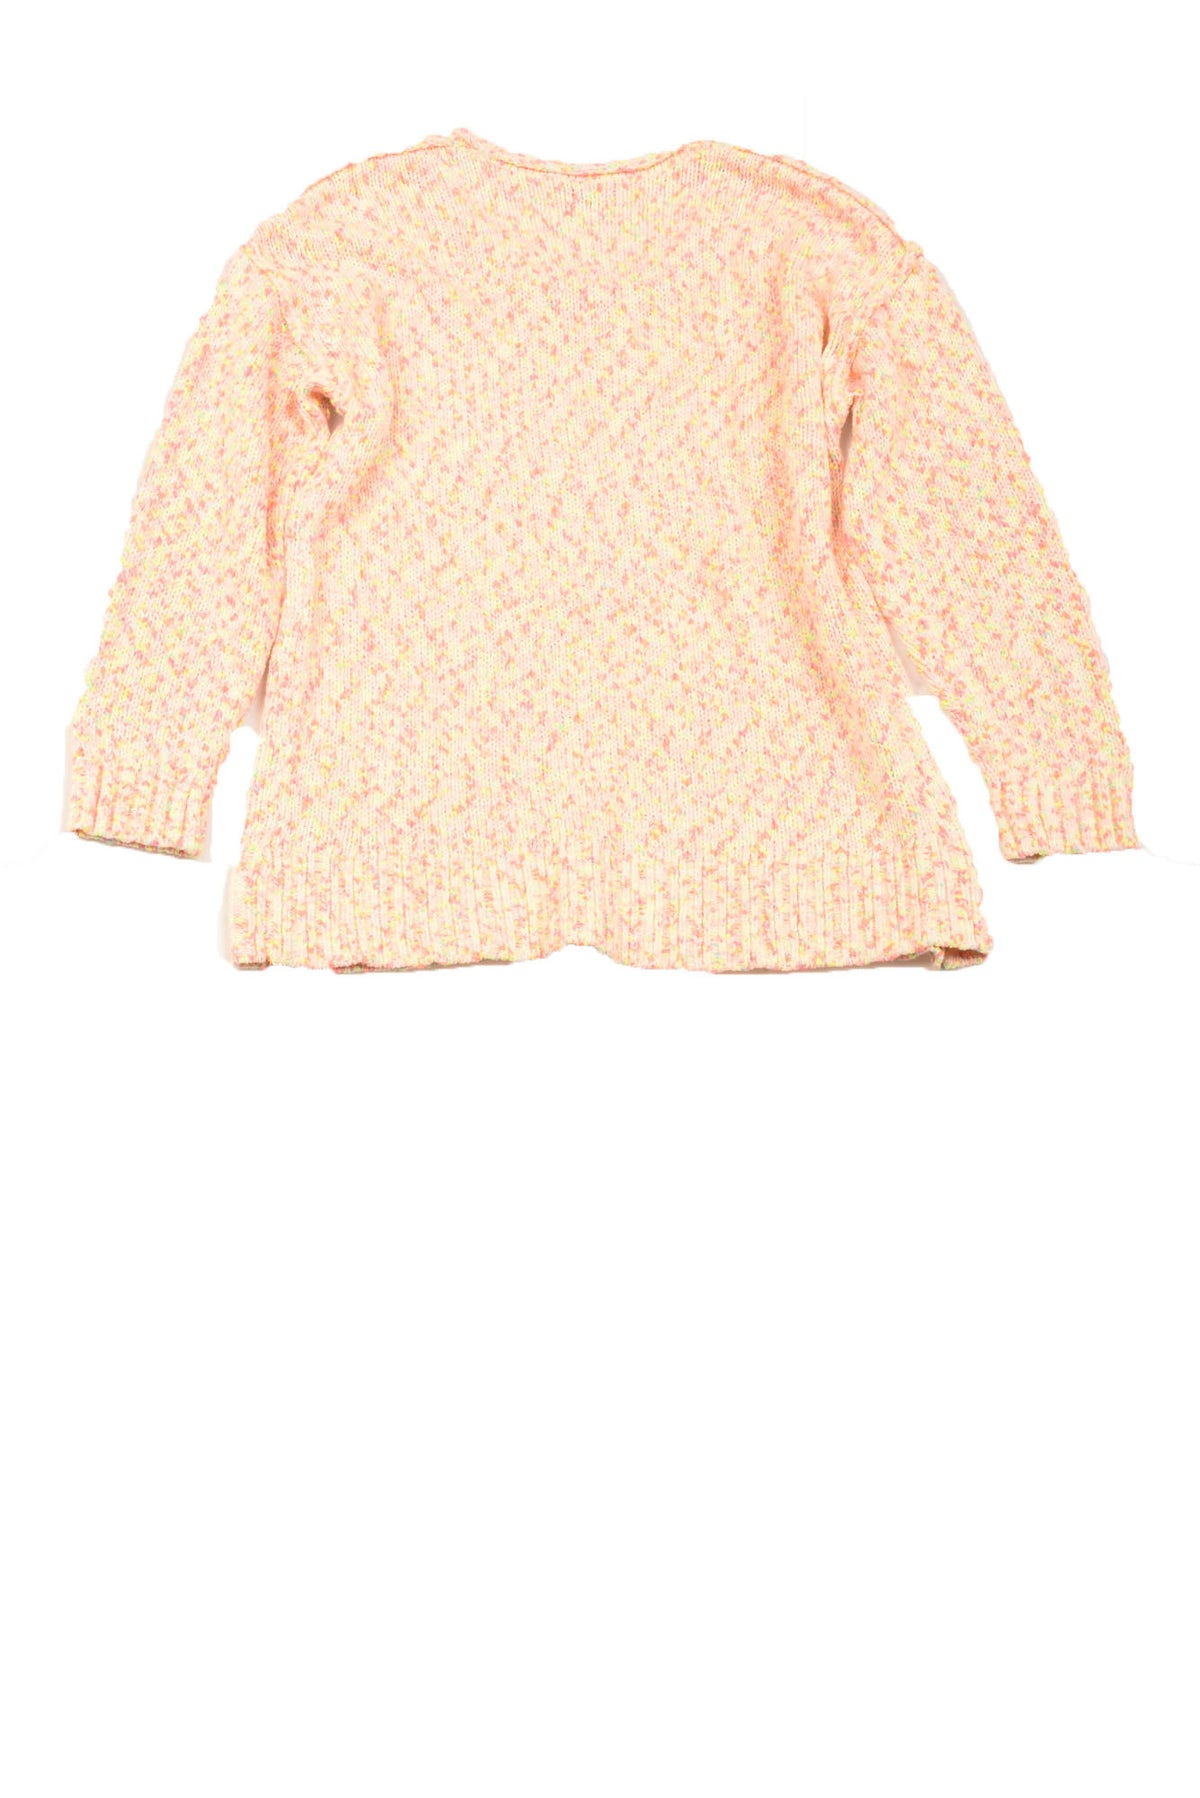 Torrid Size 00 Medium/Large Women&#39;s Sweater